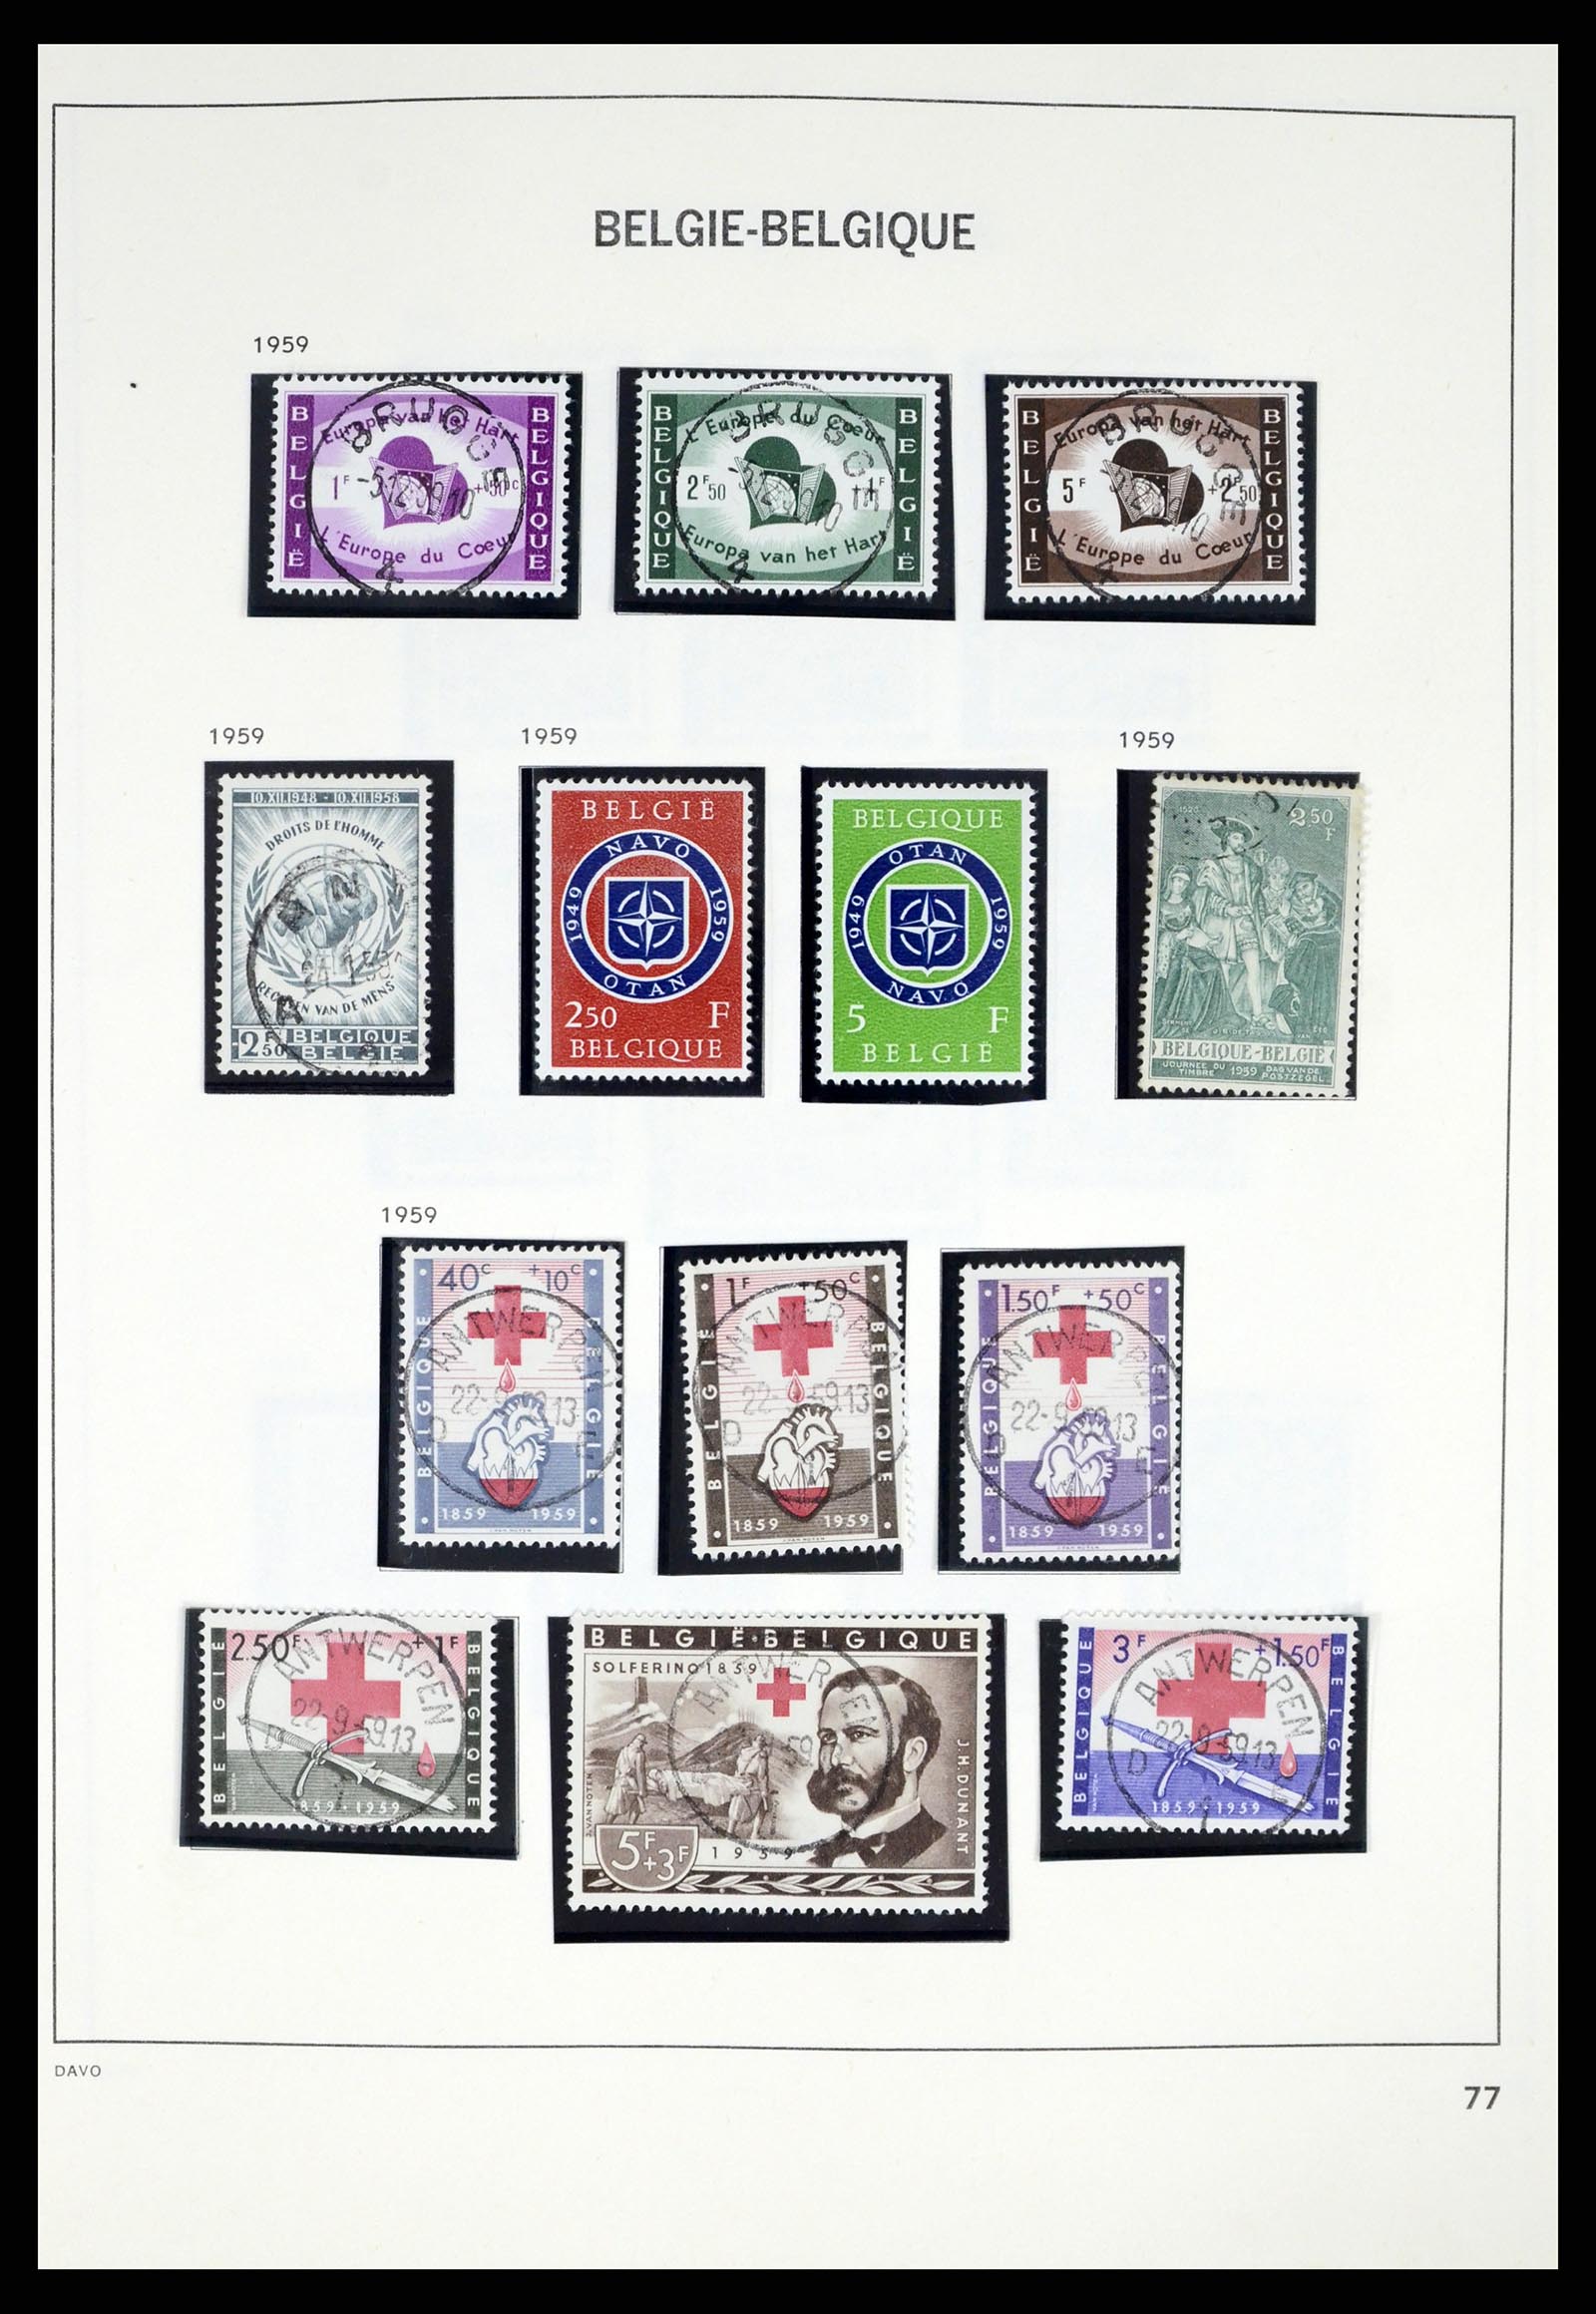 37367 073 - Stamp collection 37367 Belgium 1849-2003.